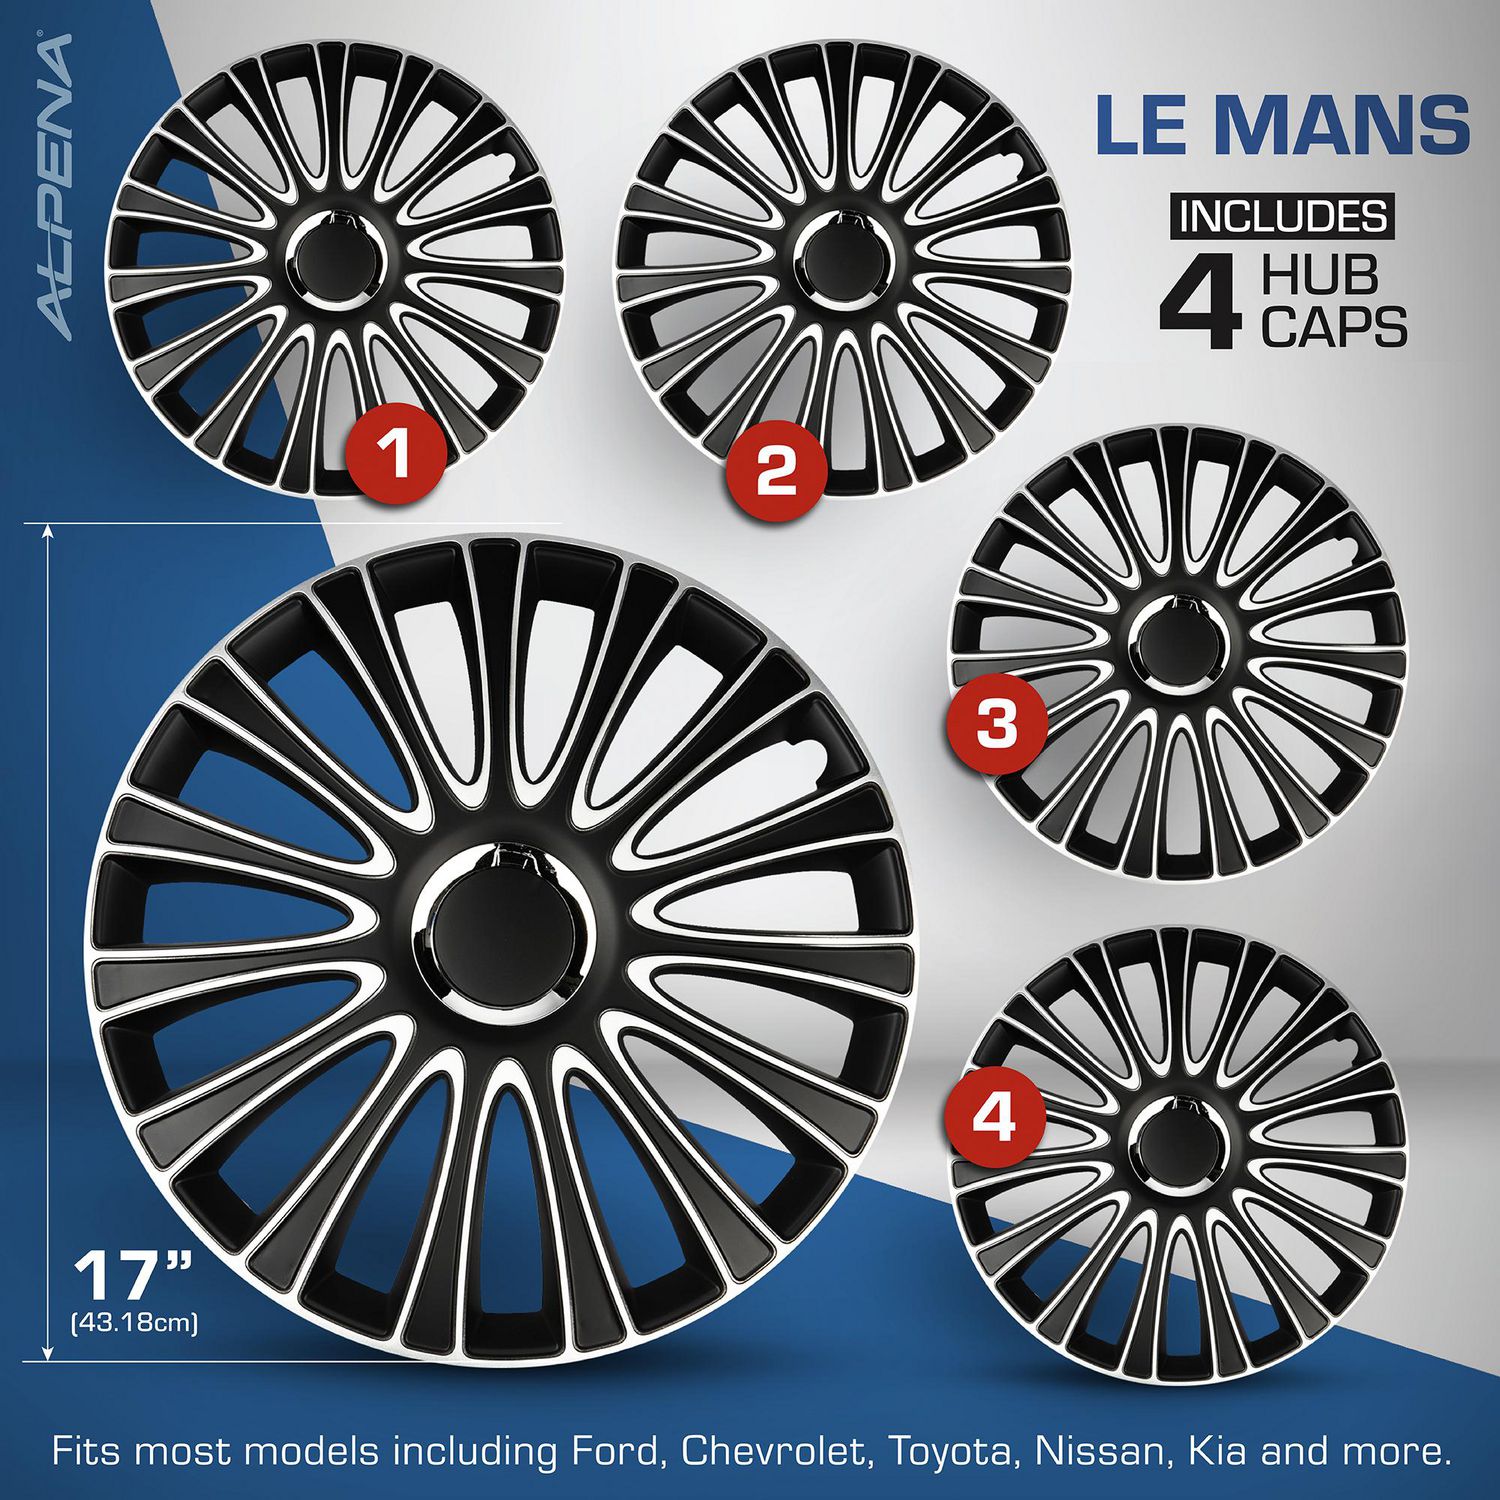 Alpena 17" Le Mans Wheel Covers, Silver  Black, set of 4, Hubcaps 